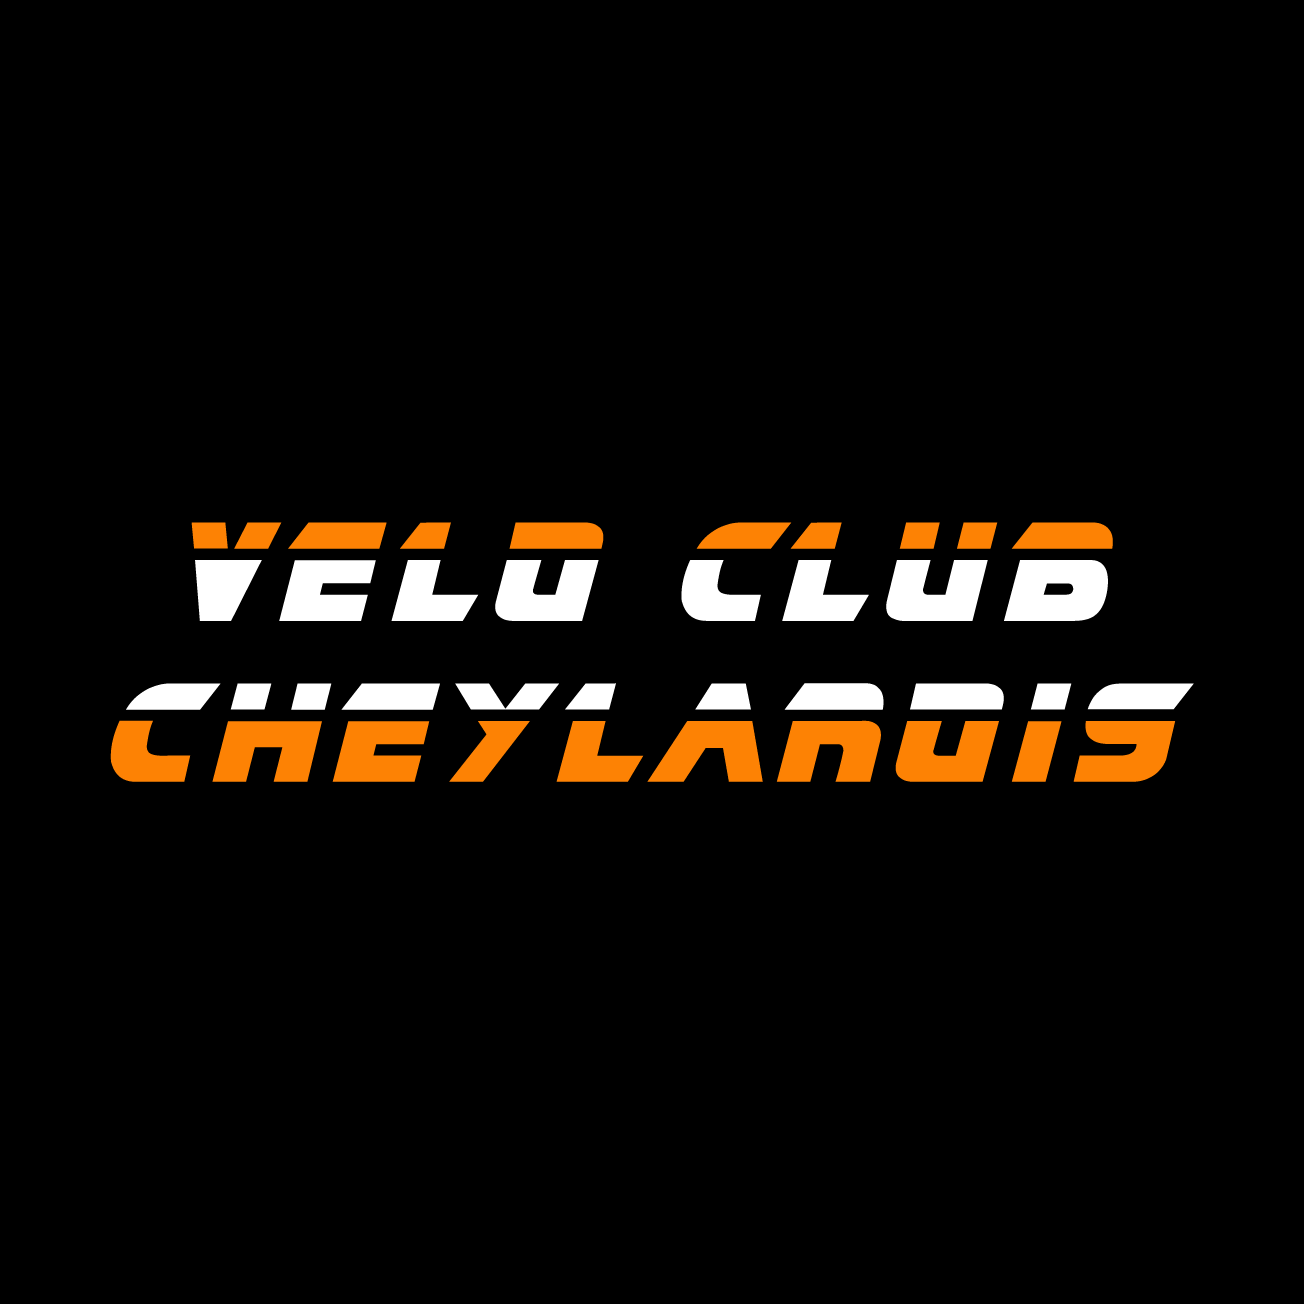 Club Image for VELO CLUB CHEYLAROIS